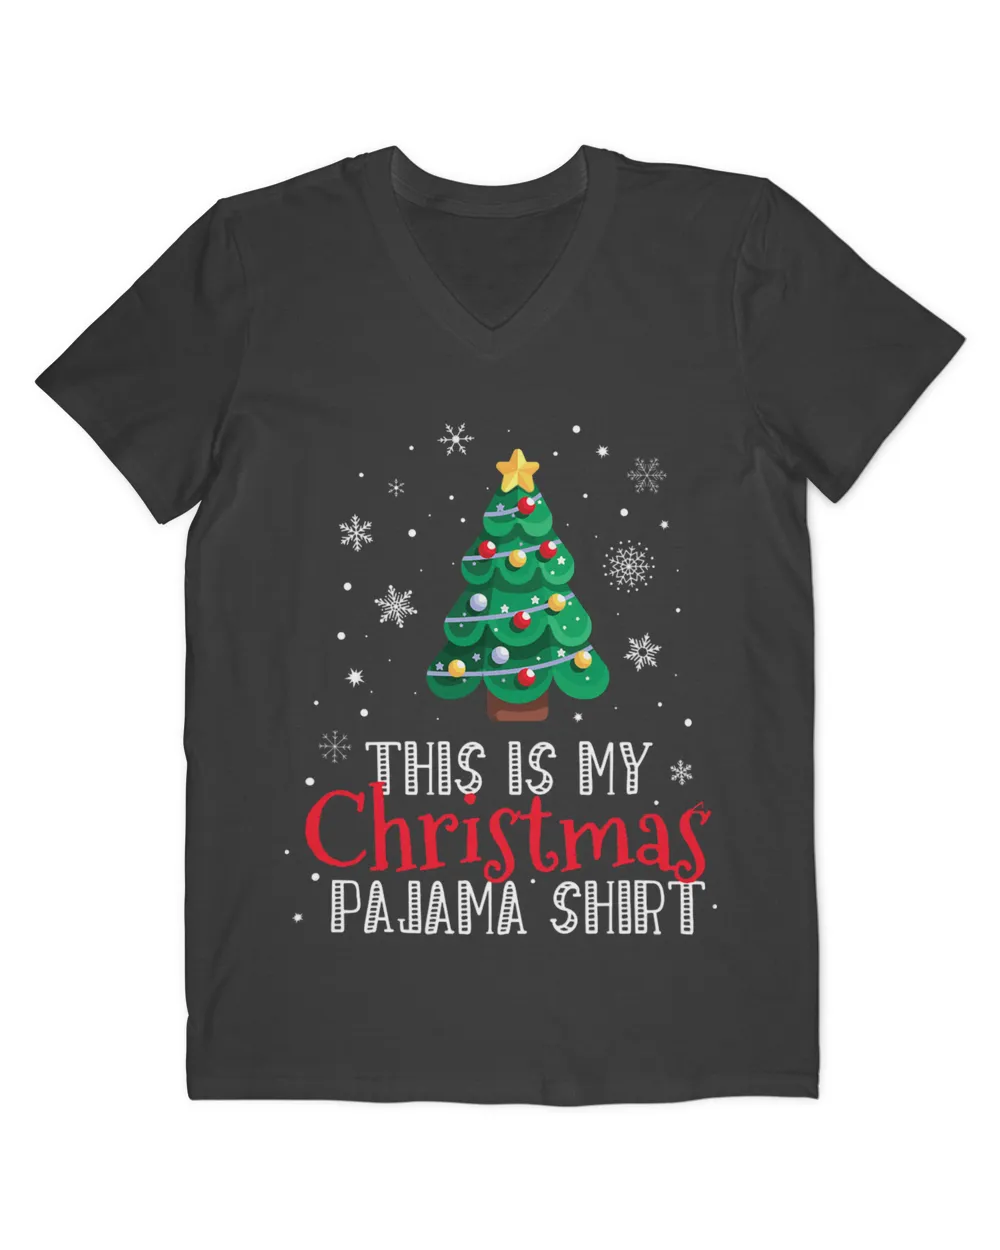 This is My Christmas Pajama Shirt Funny Xmas Christmas Tree